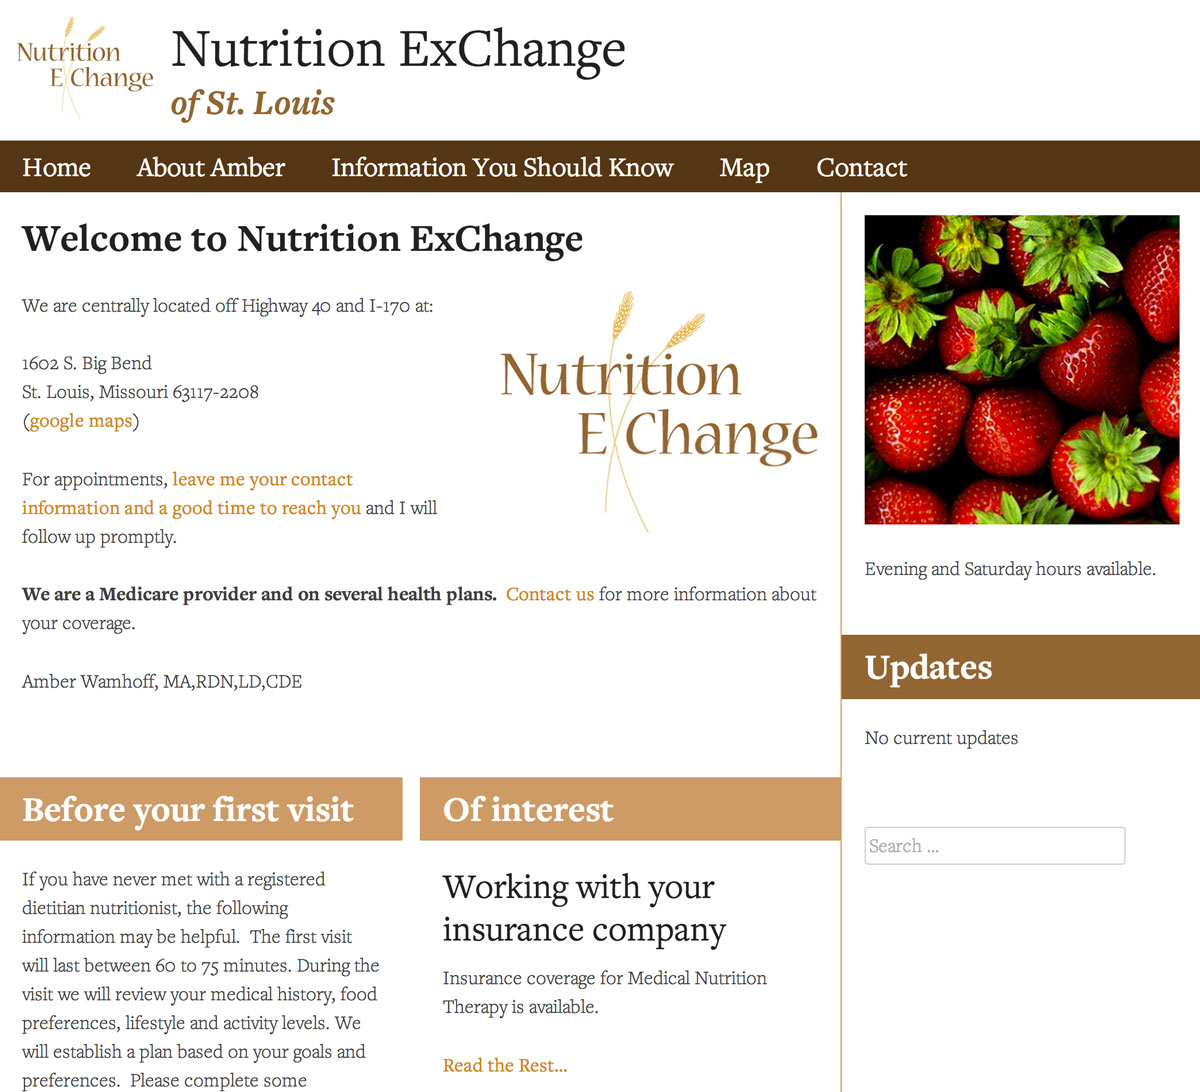 a snapshot of Nutrition ExChange's website